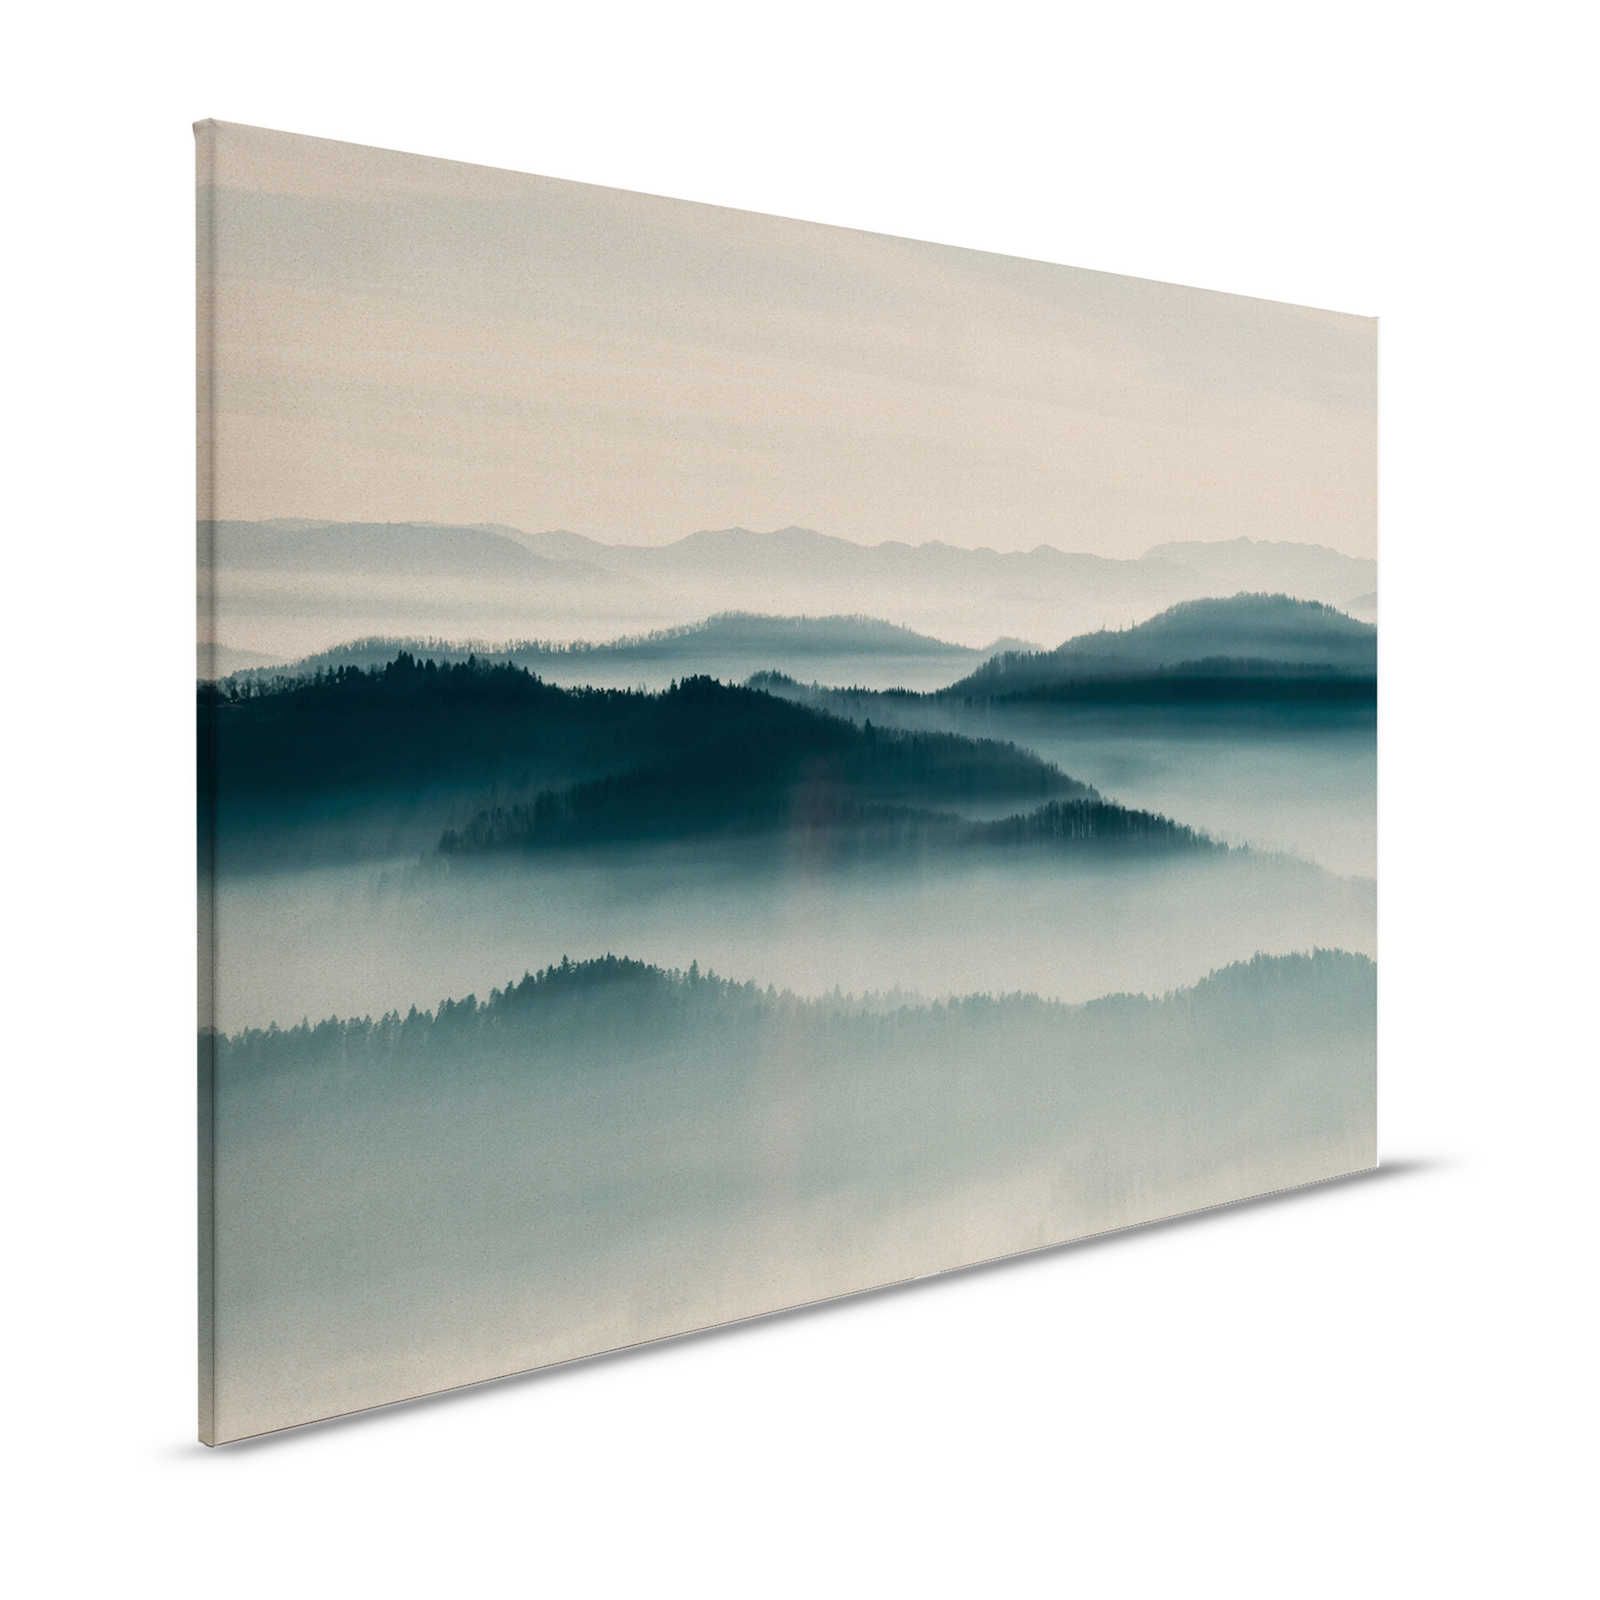 Horizon 1 - Canvas painting with fog landscape, nature Sky Line - 1.20 m x 0.80 m
